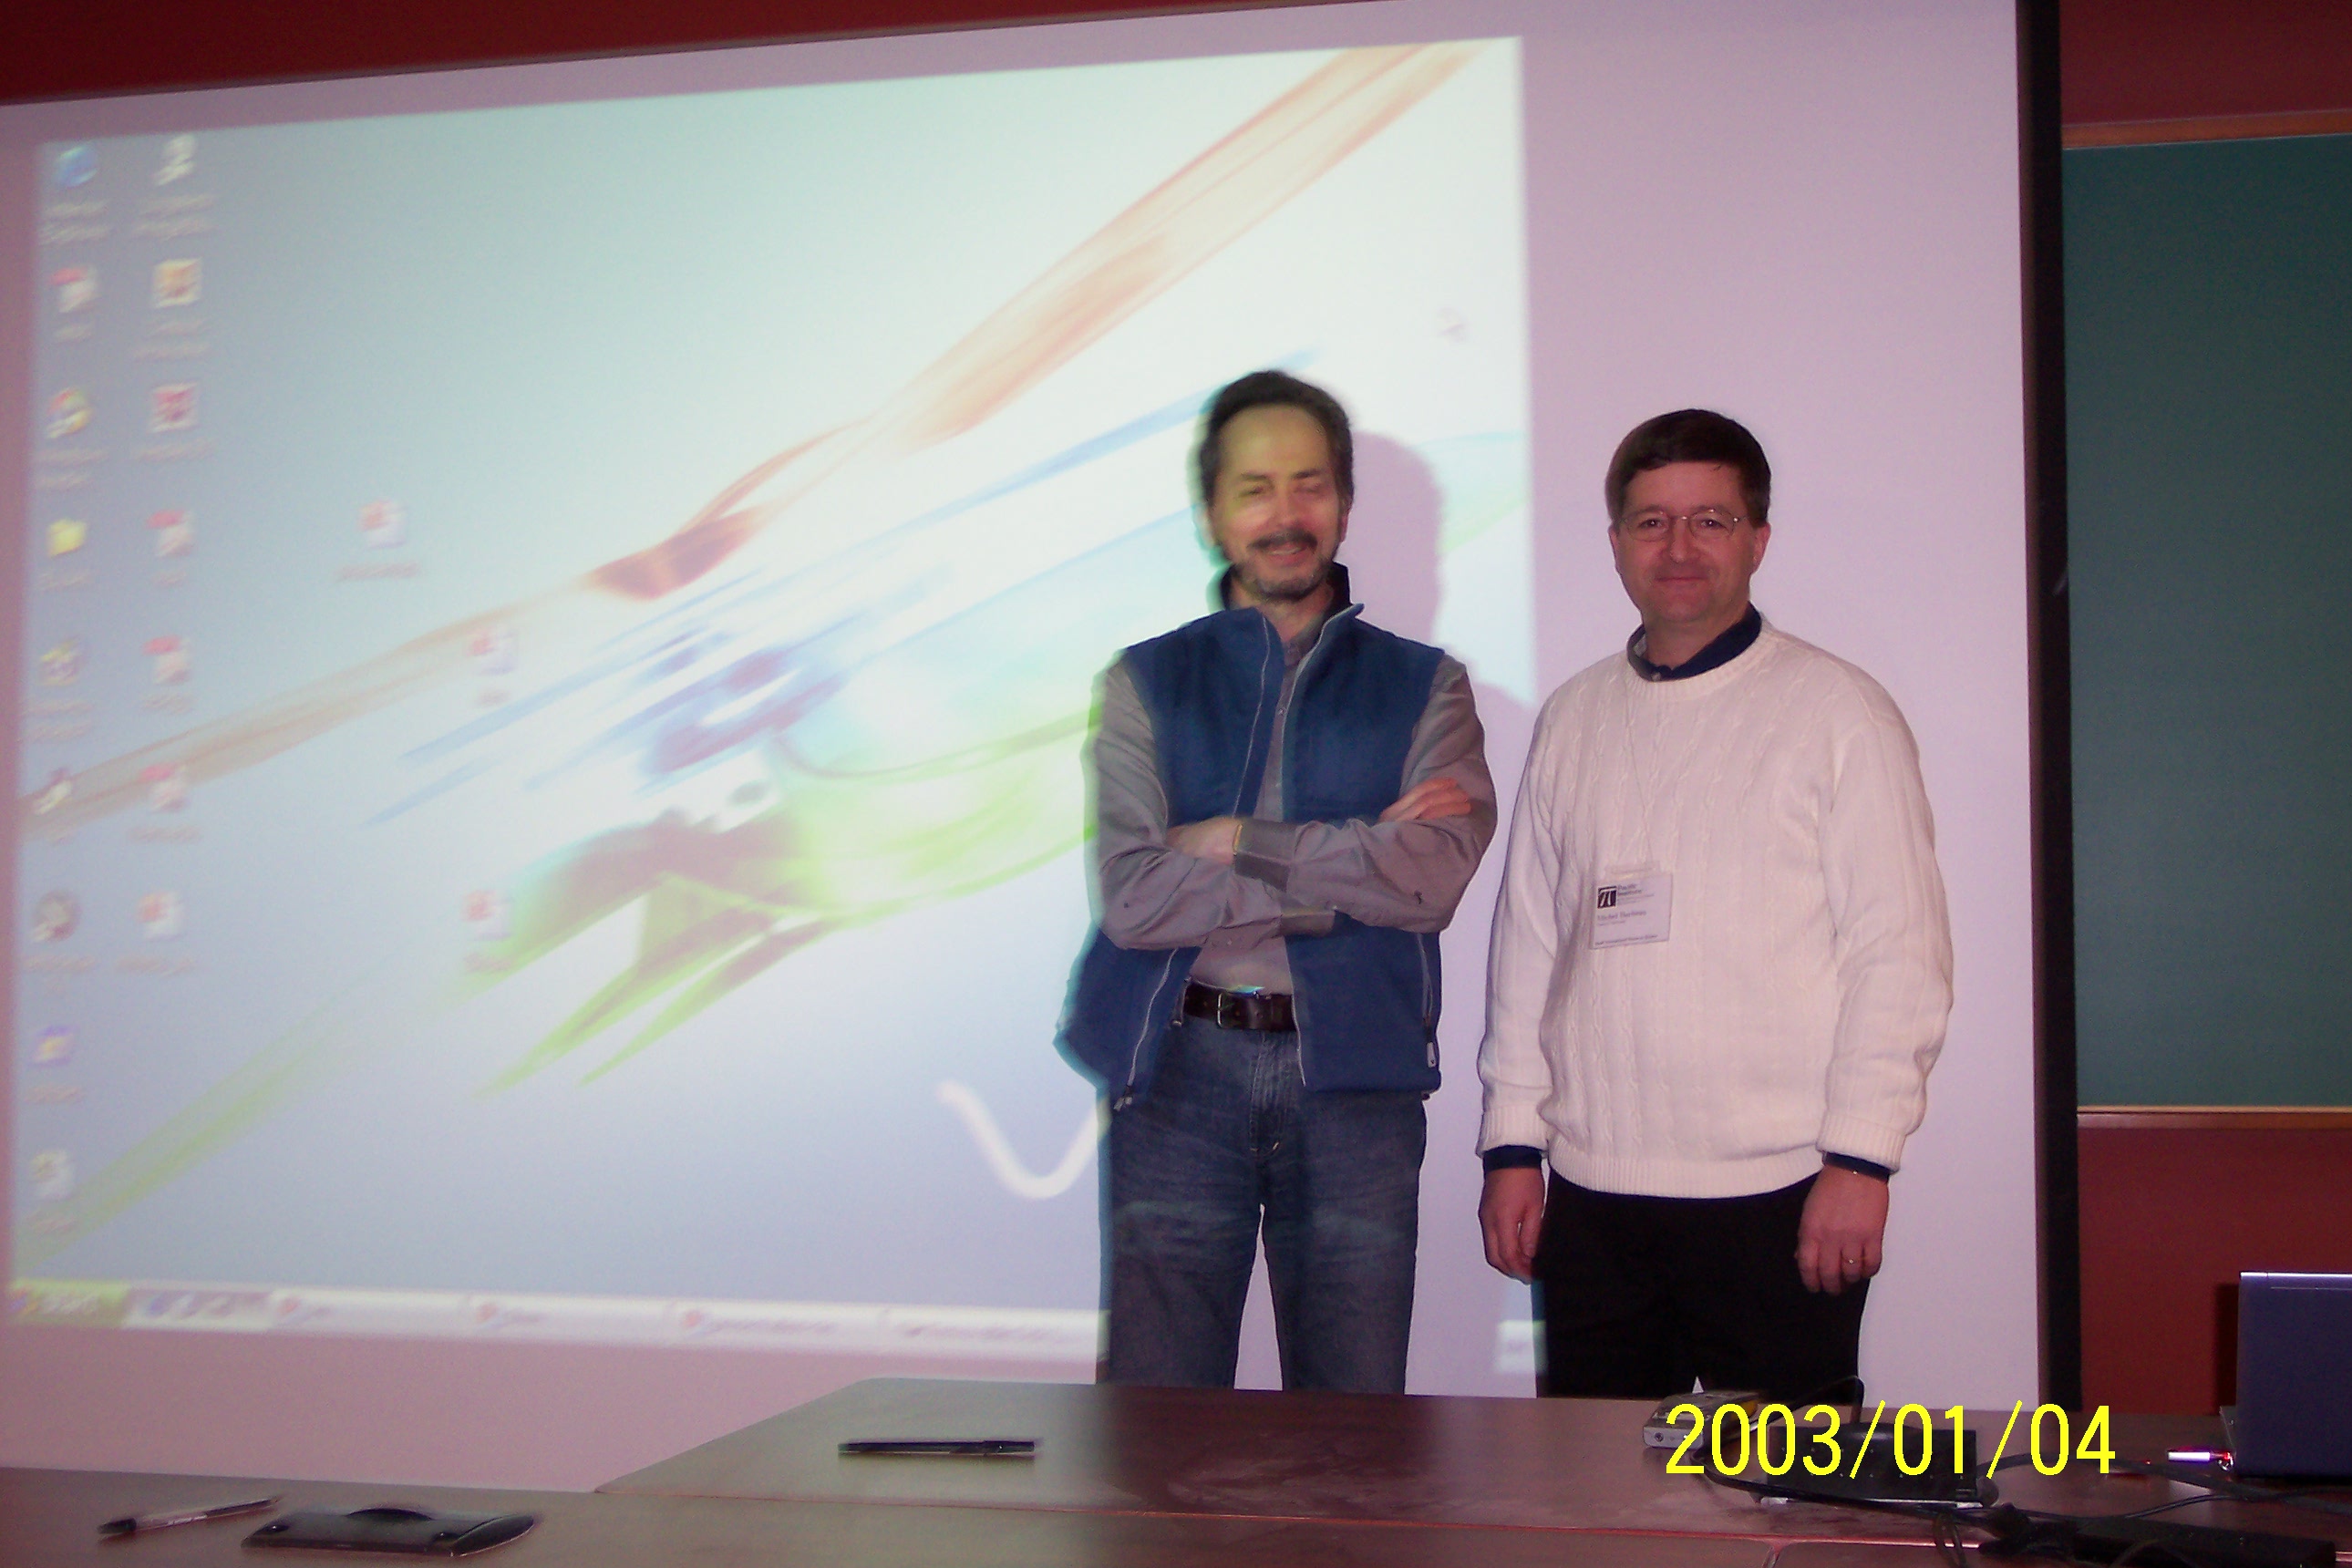 Prof. Kranakis and Prof. Barbeau